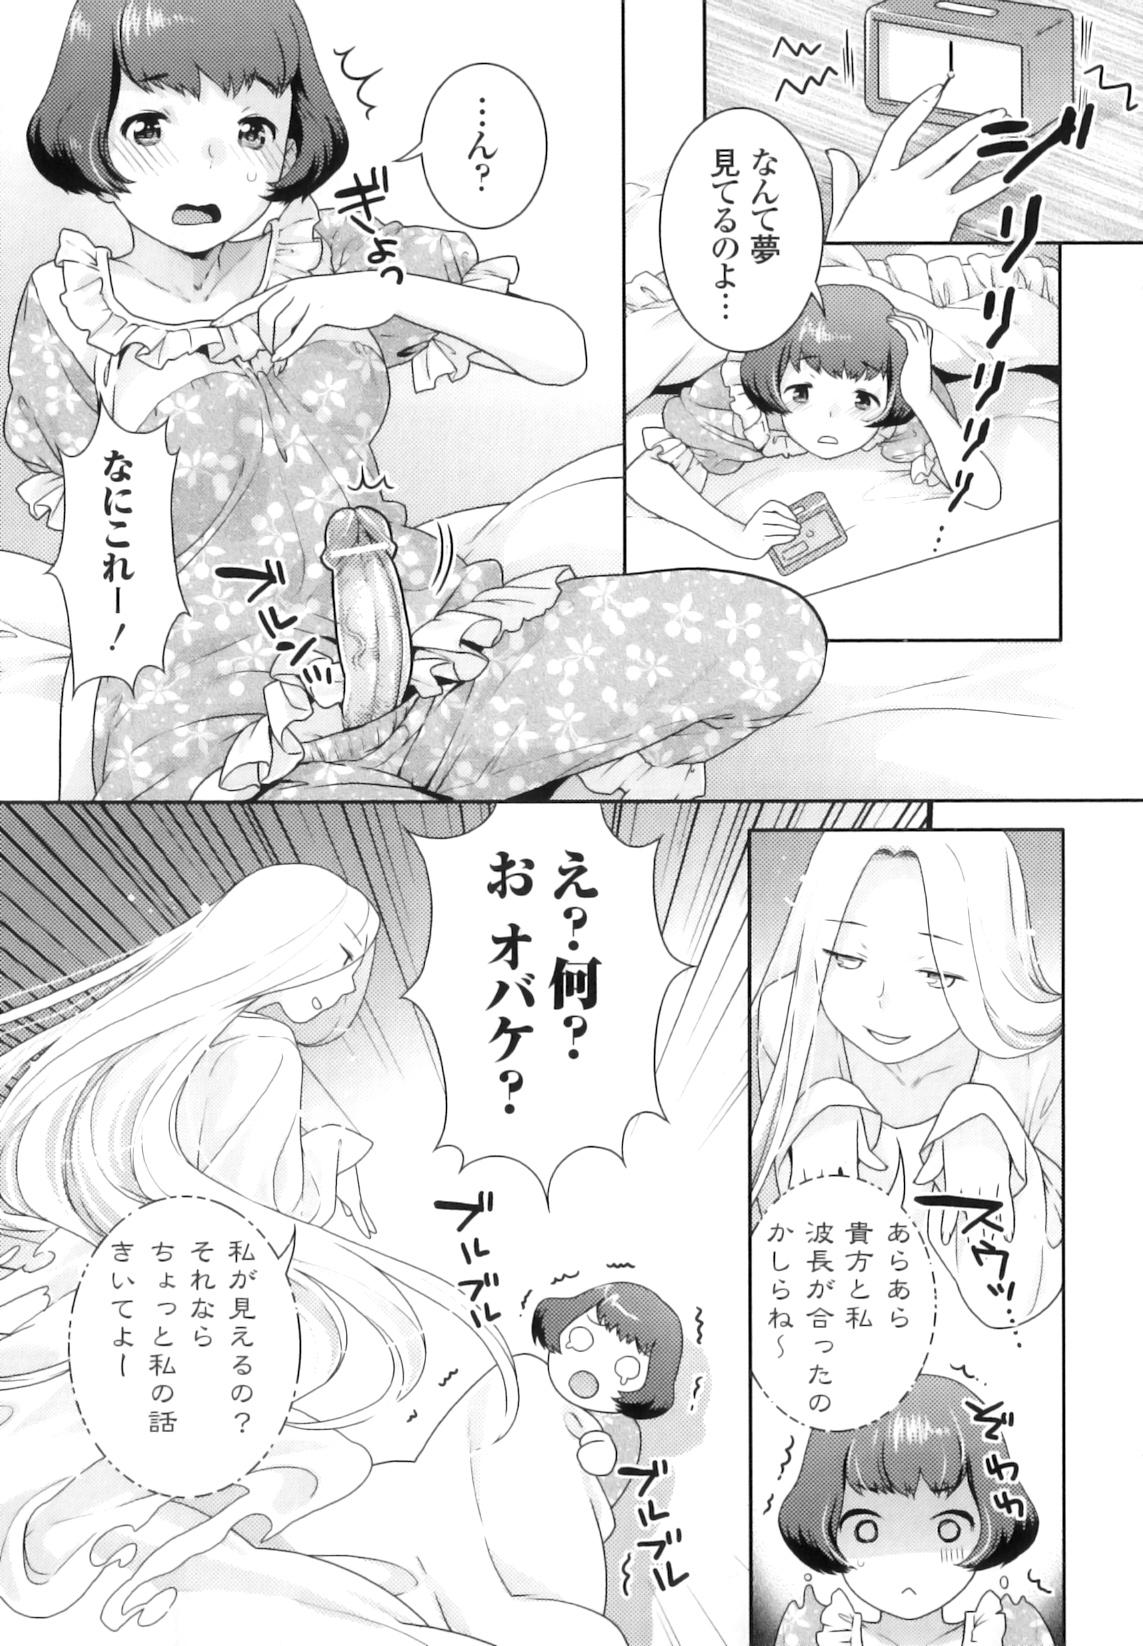 Made Futanari Relations Private - Page 10